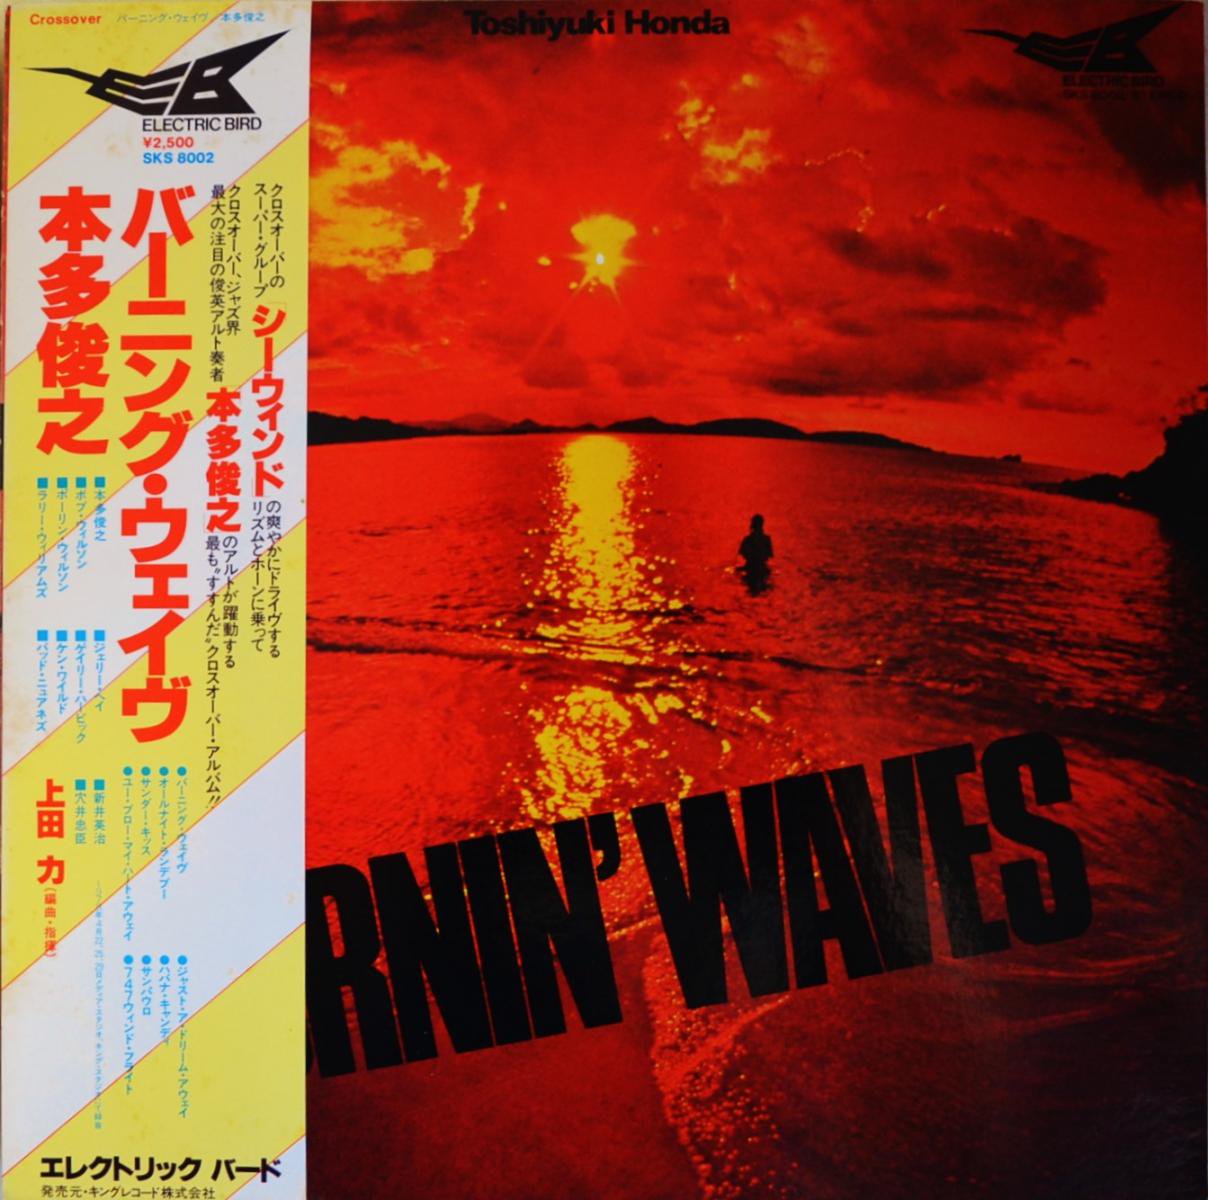 Toshiyuki honda burnin waves #1